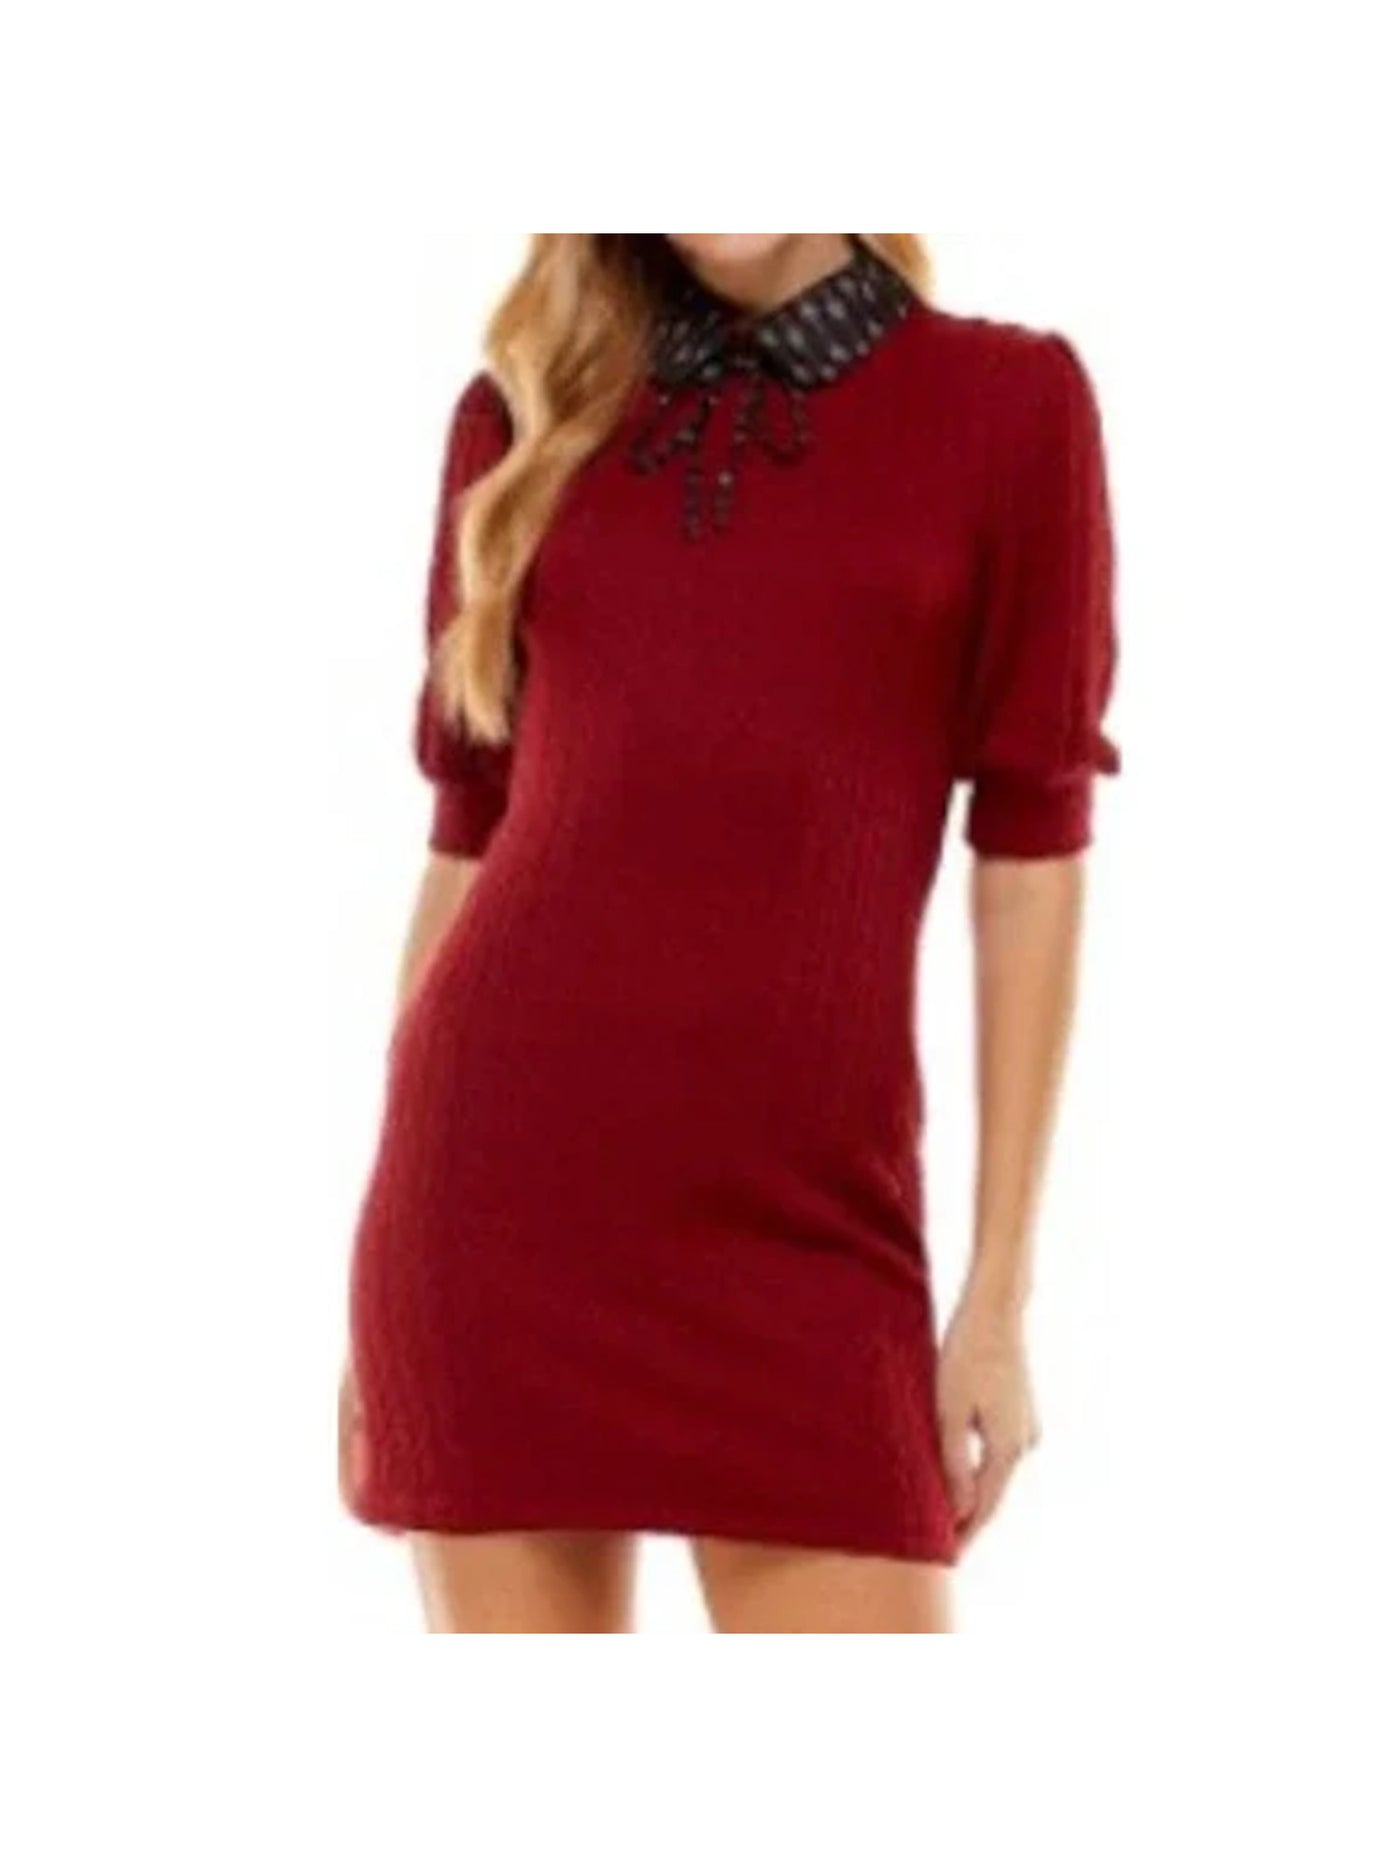 KINGSTON GREY Womens Red Stretch Tie Contrast Collar Elbow Sleeve Short Sweater Dress Juniors XXL